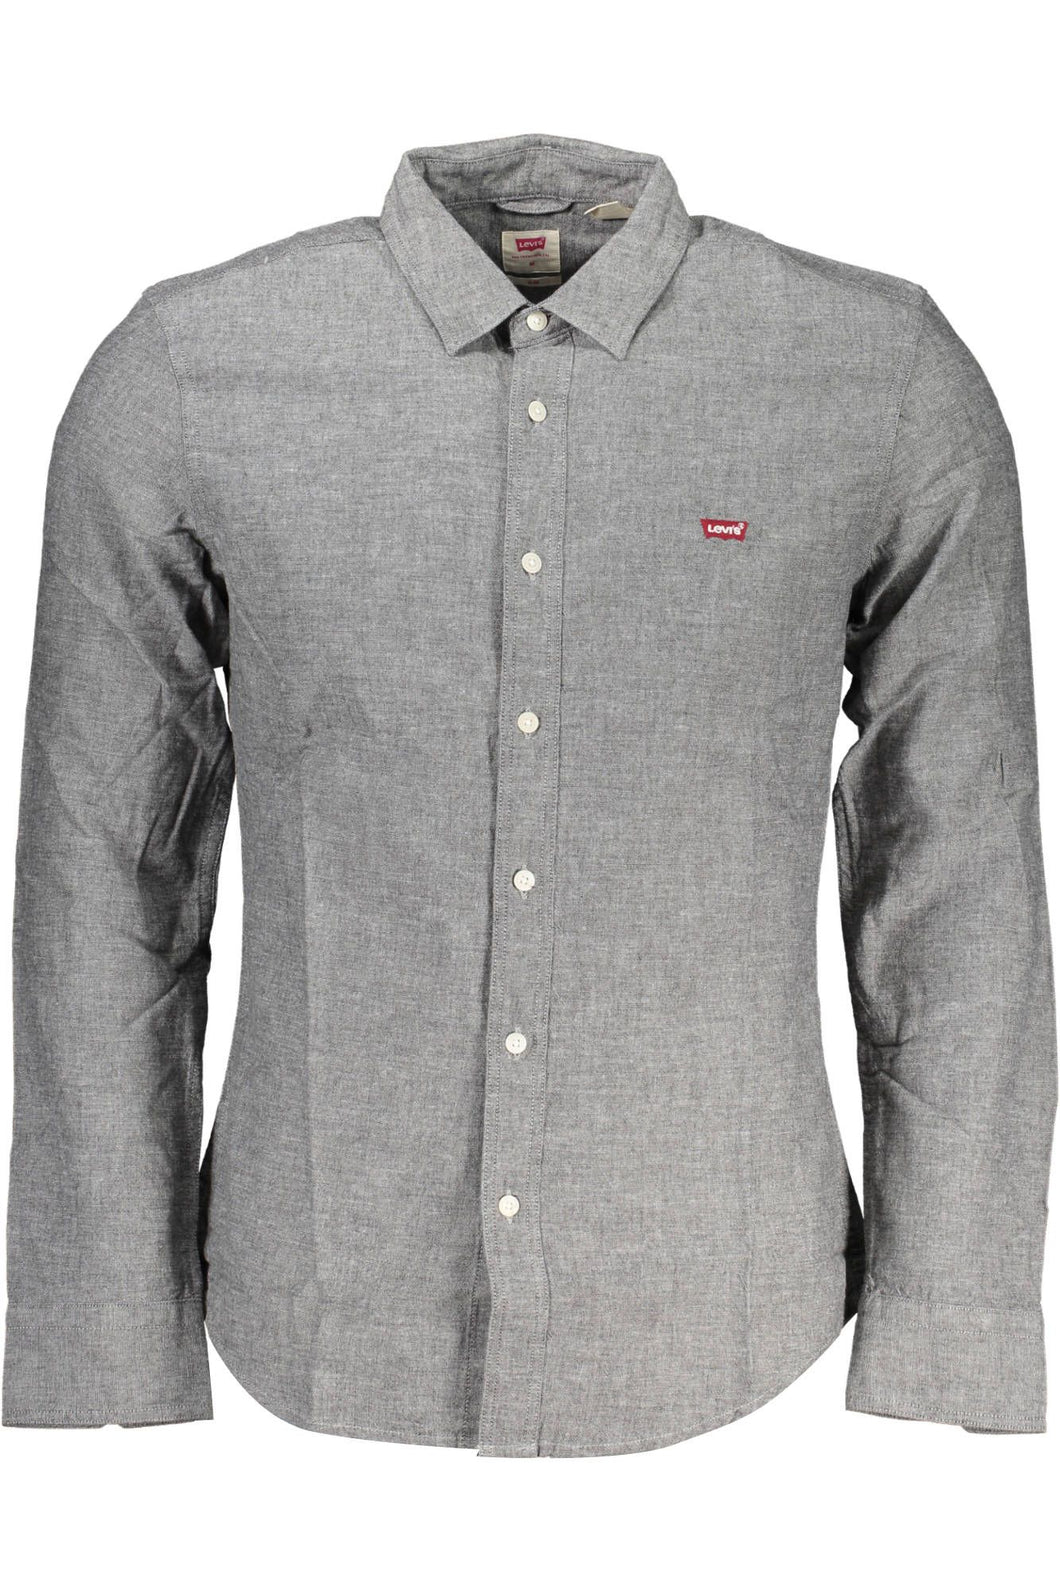 Levi's Gray Cotton Shirt